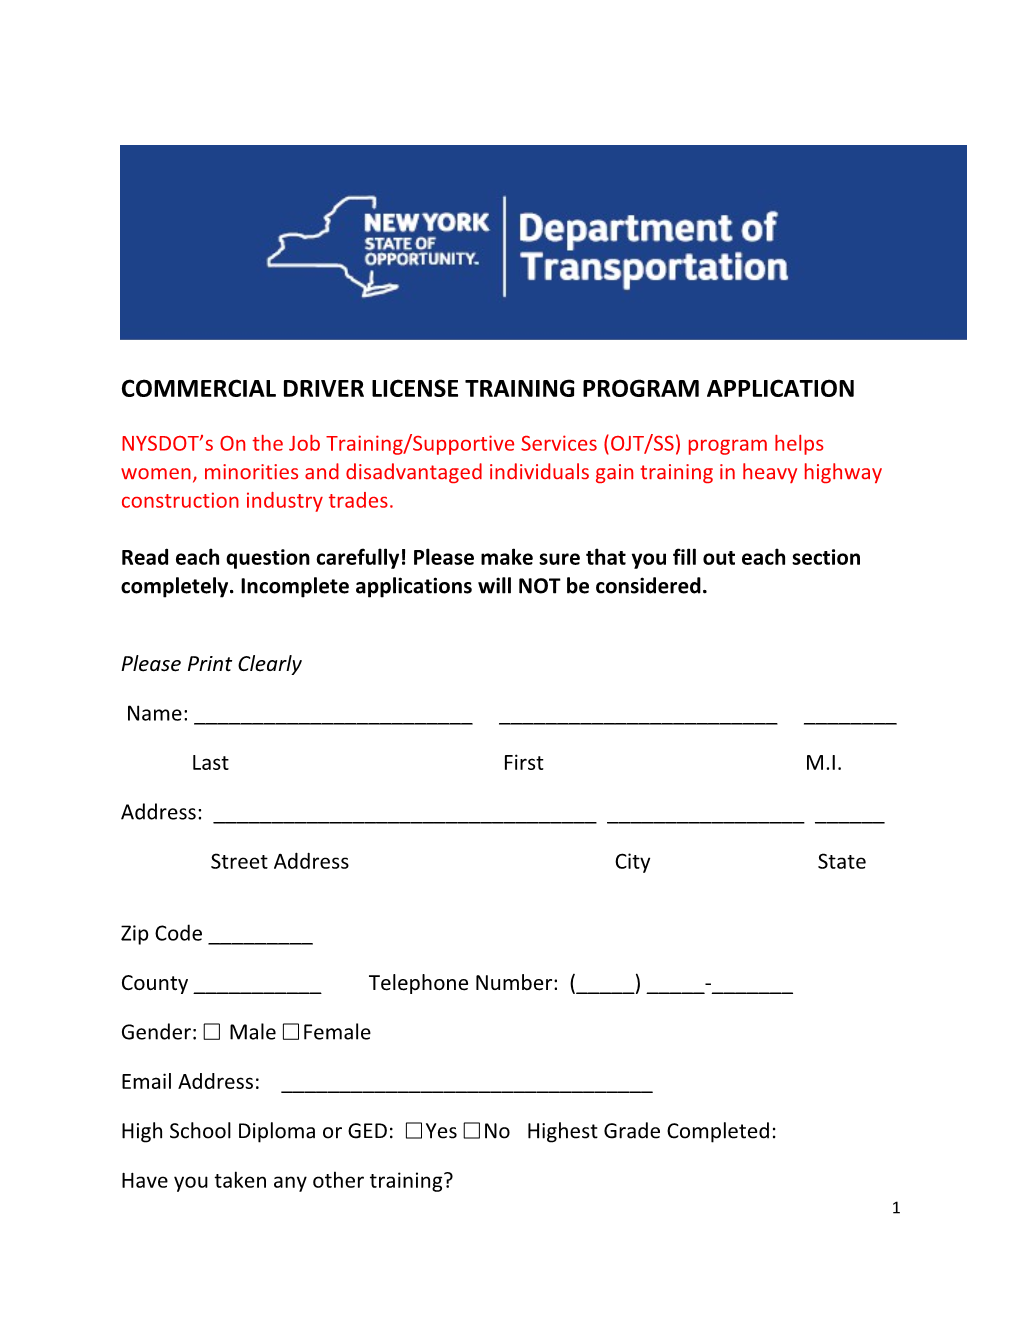 Commercial Driver License Training Program Application